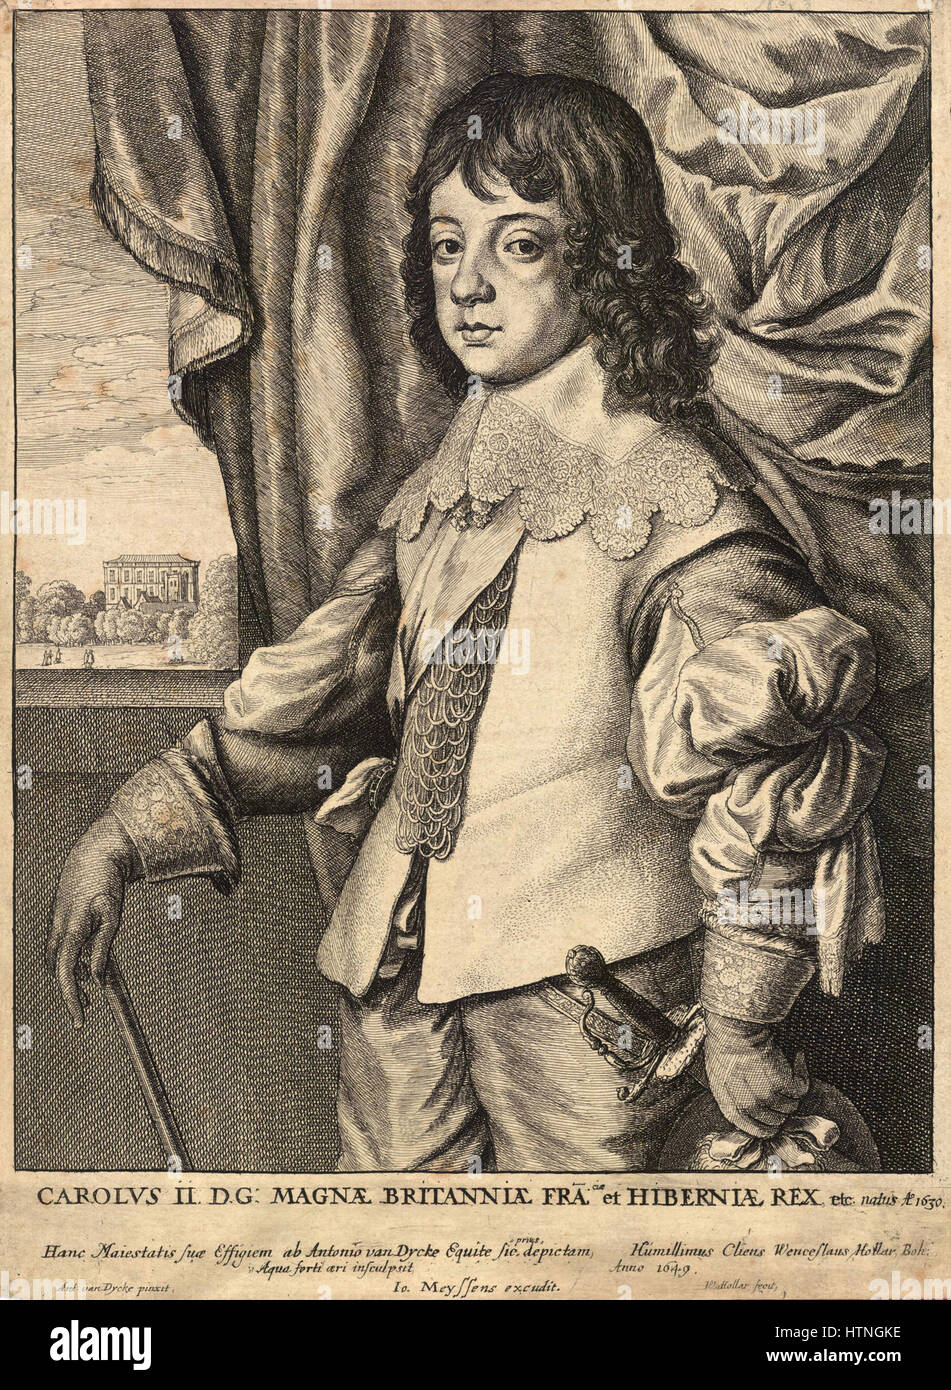 Venceslao Hollar - Charles II (stato 4) Foto Stock